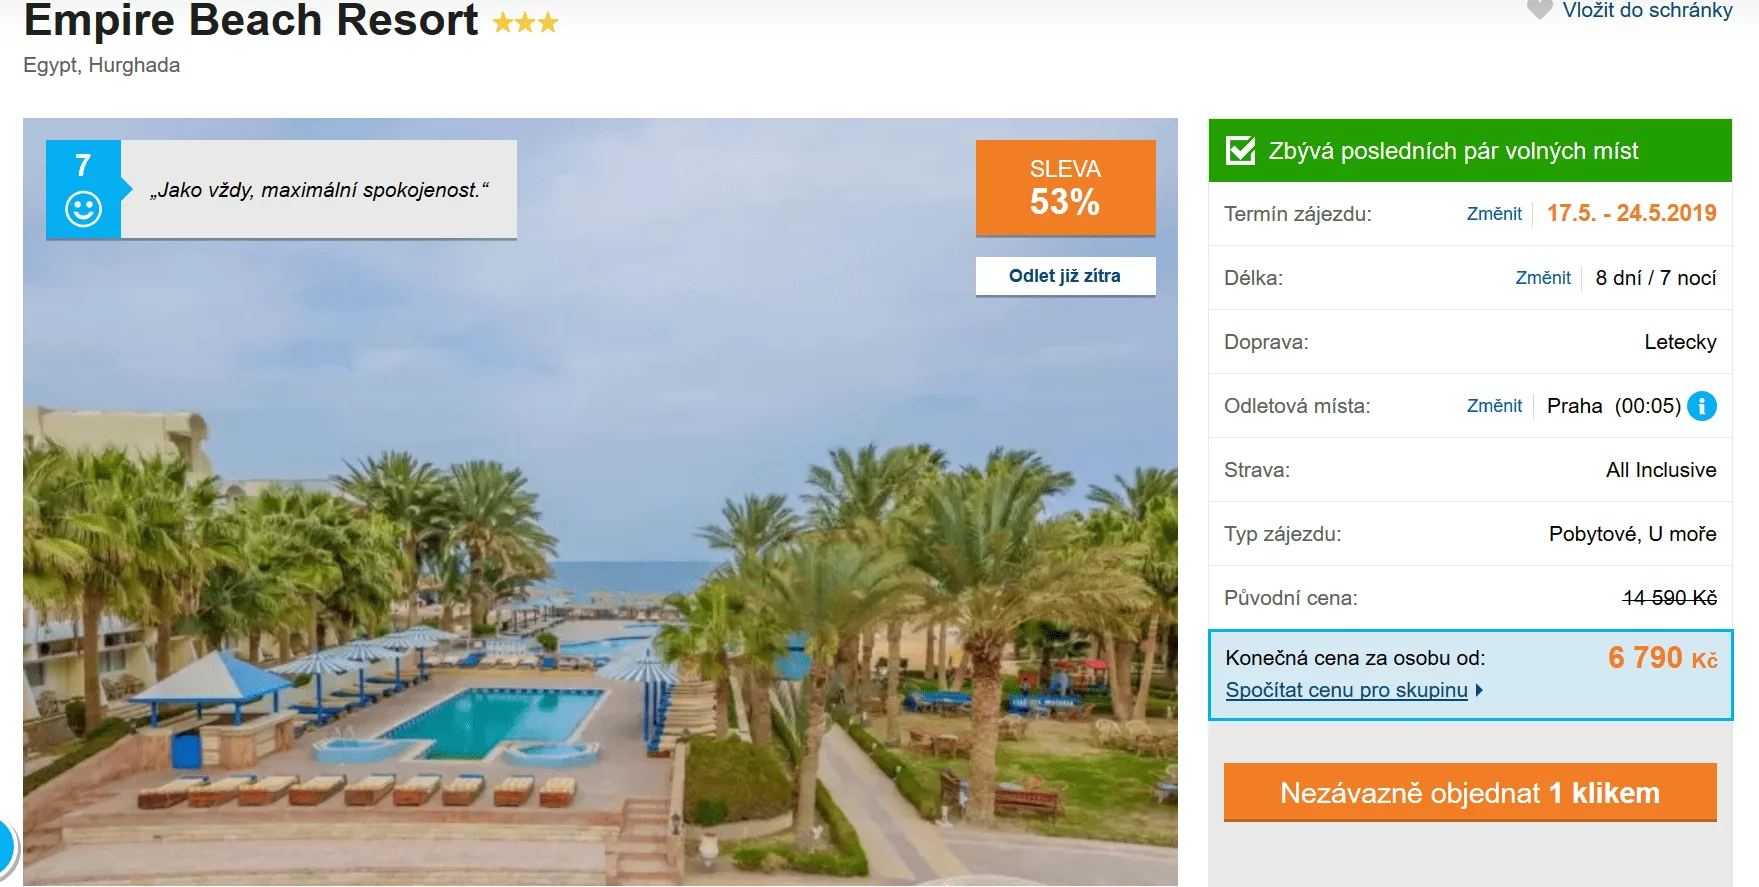 Zájezd Egypt (hotel Empire Beach Resort)